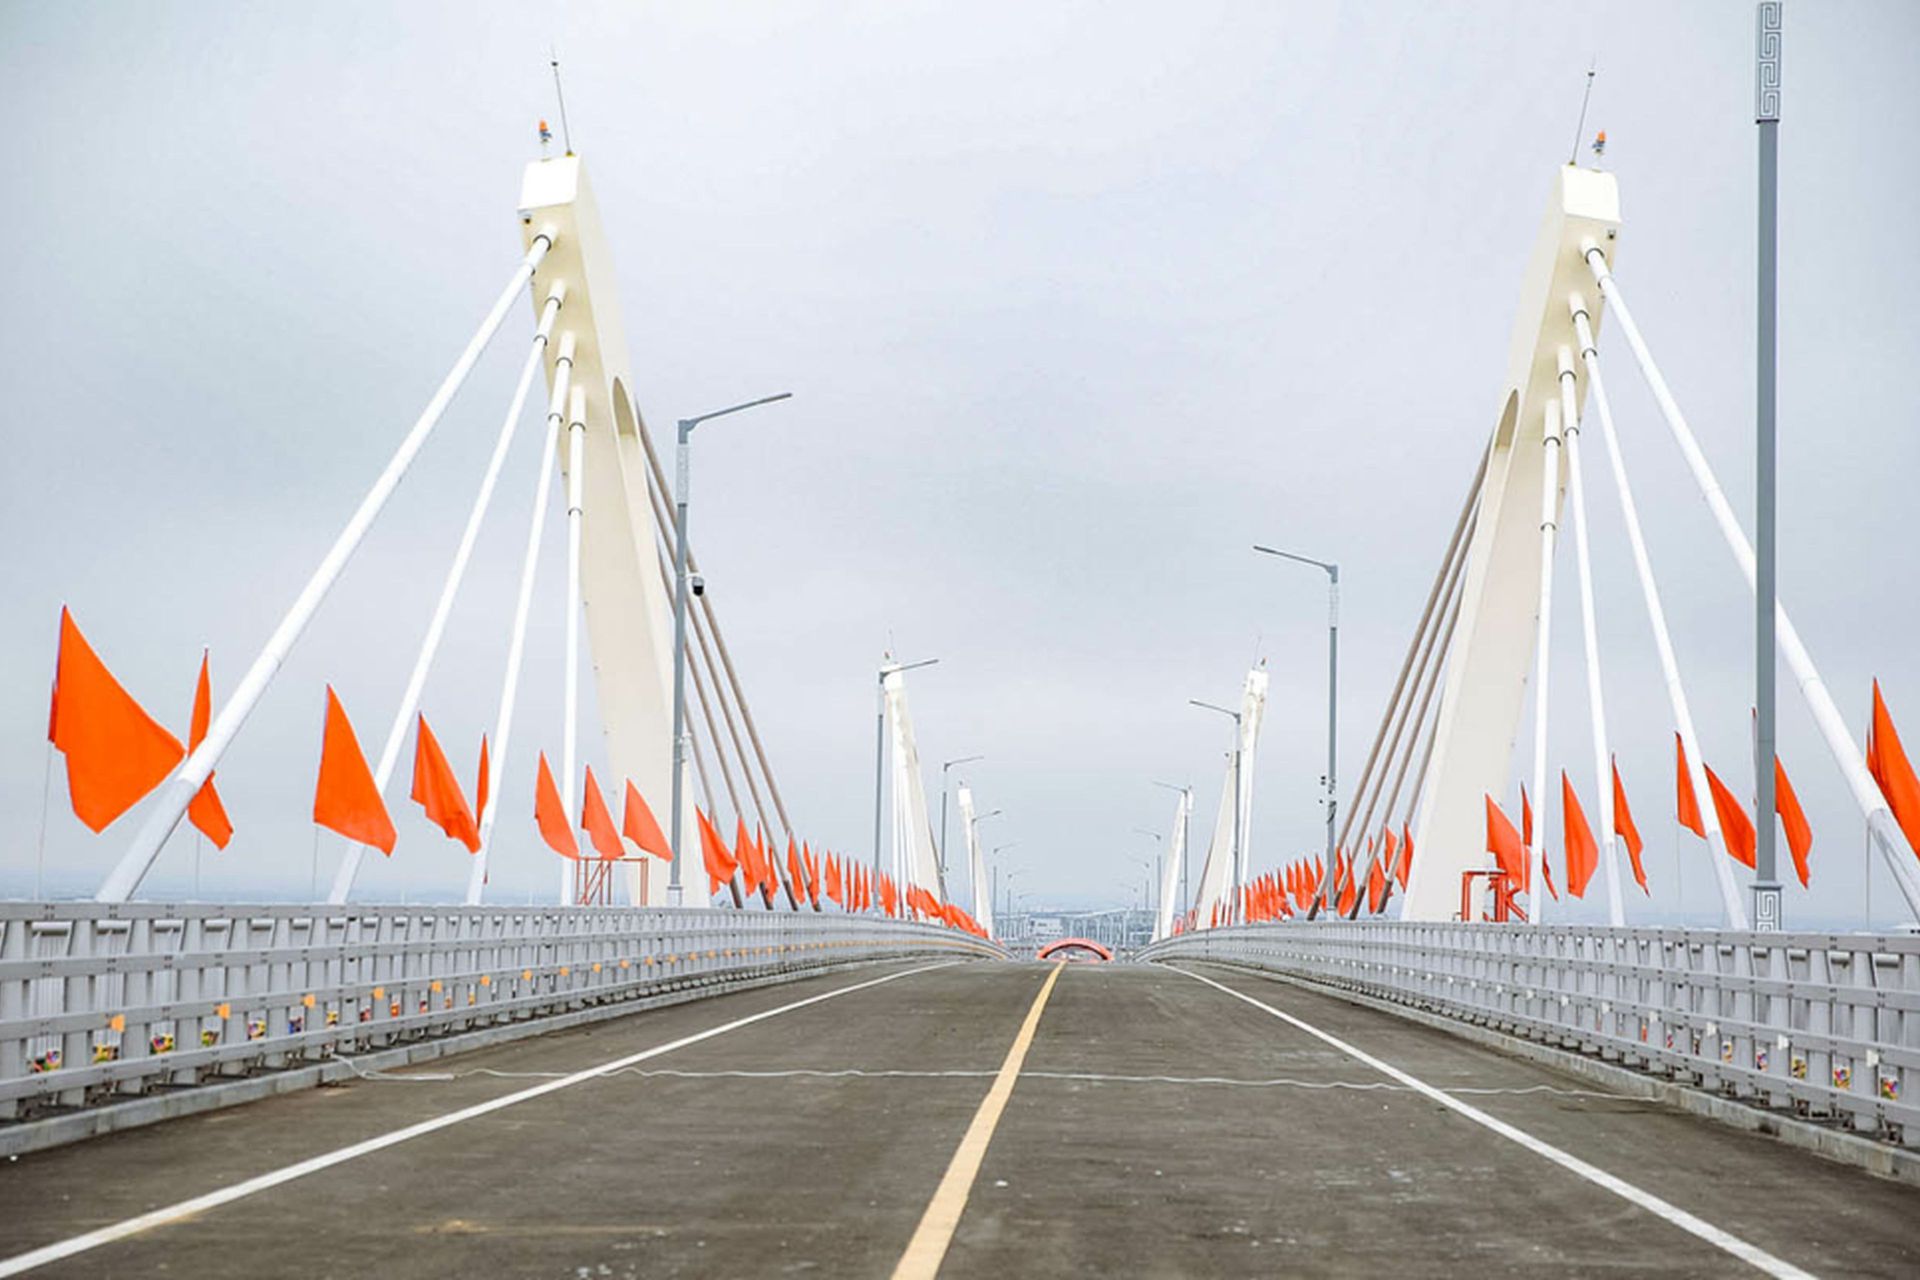 Heihe Bridge — Blagoveshchensk